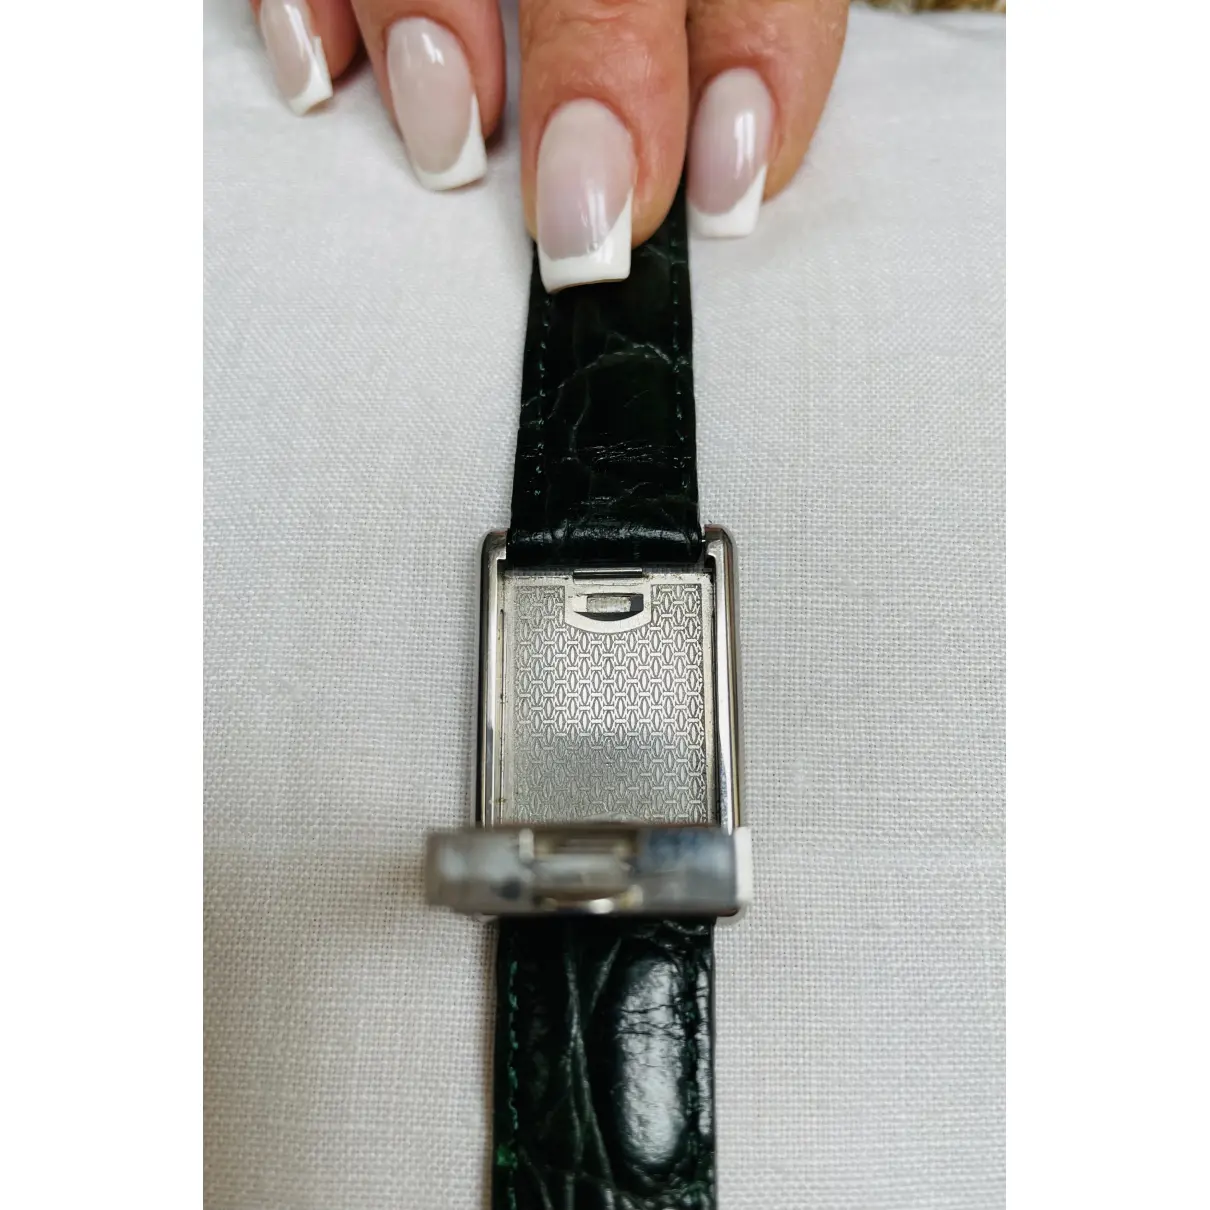 Buy Cartier Tank Basculante watch online - Vintage